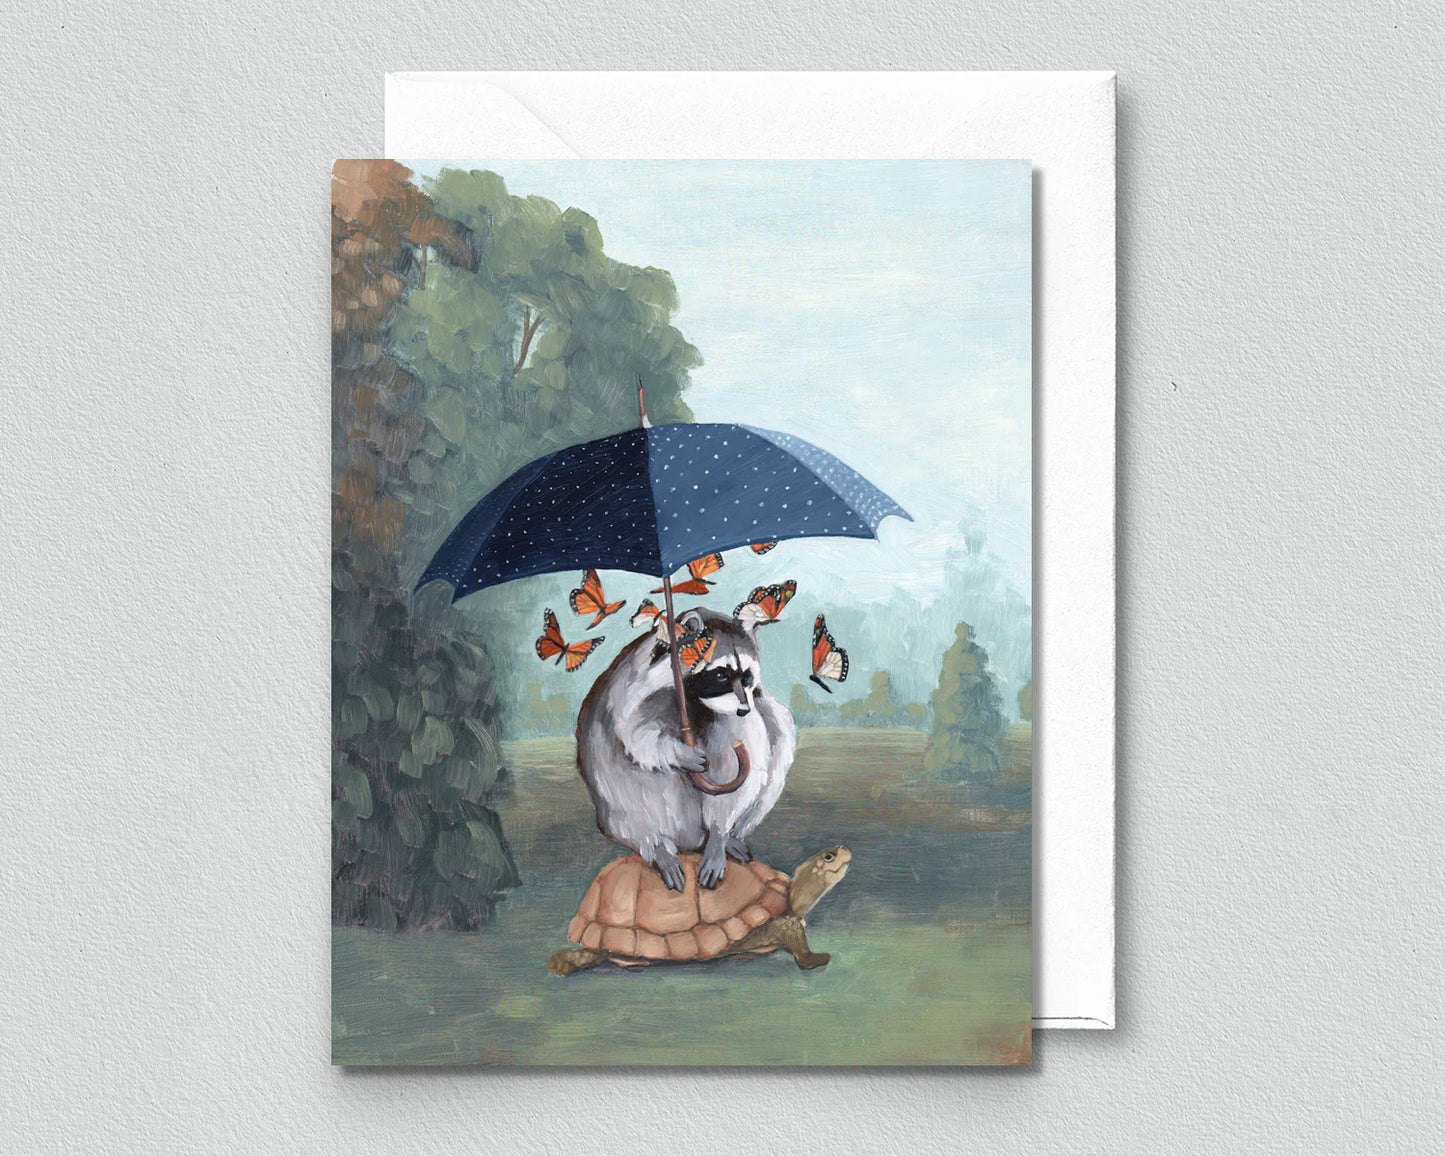 Raccoon with Umbrella Greeting Card (blank inside) by Kim Ferreira (Joie de Vivre)